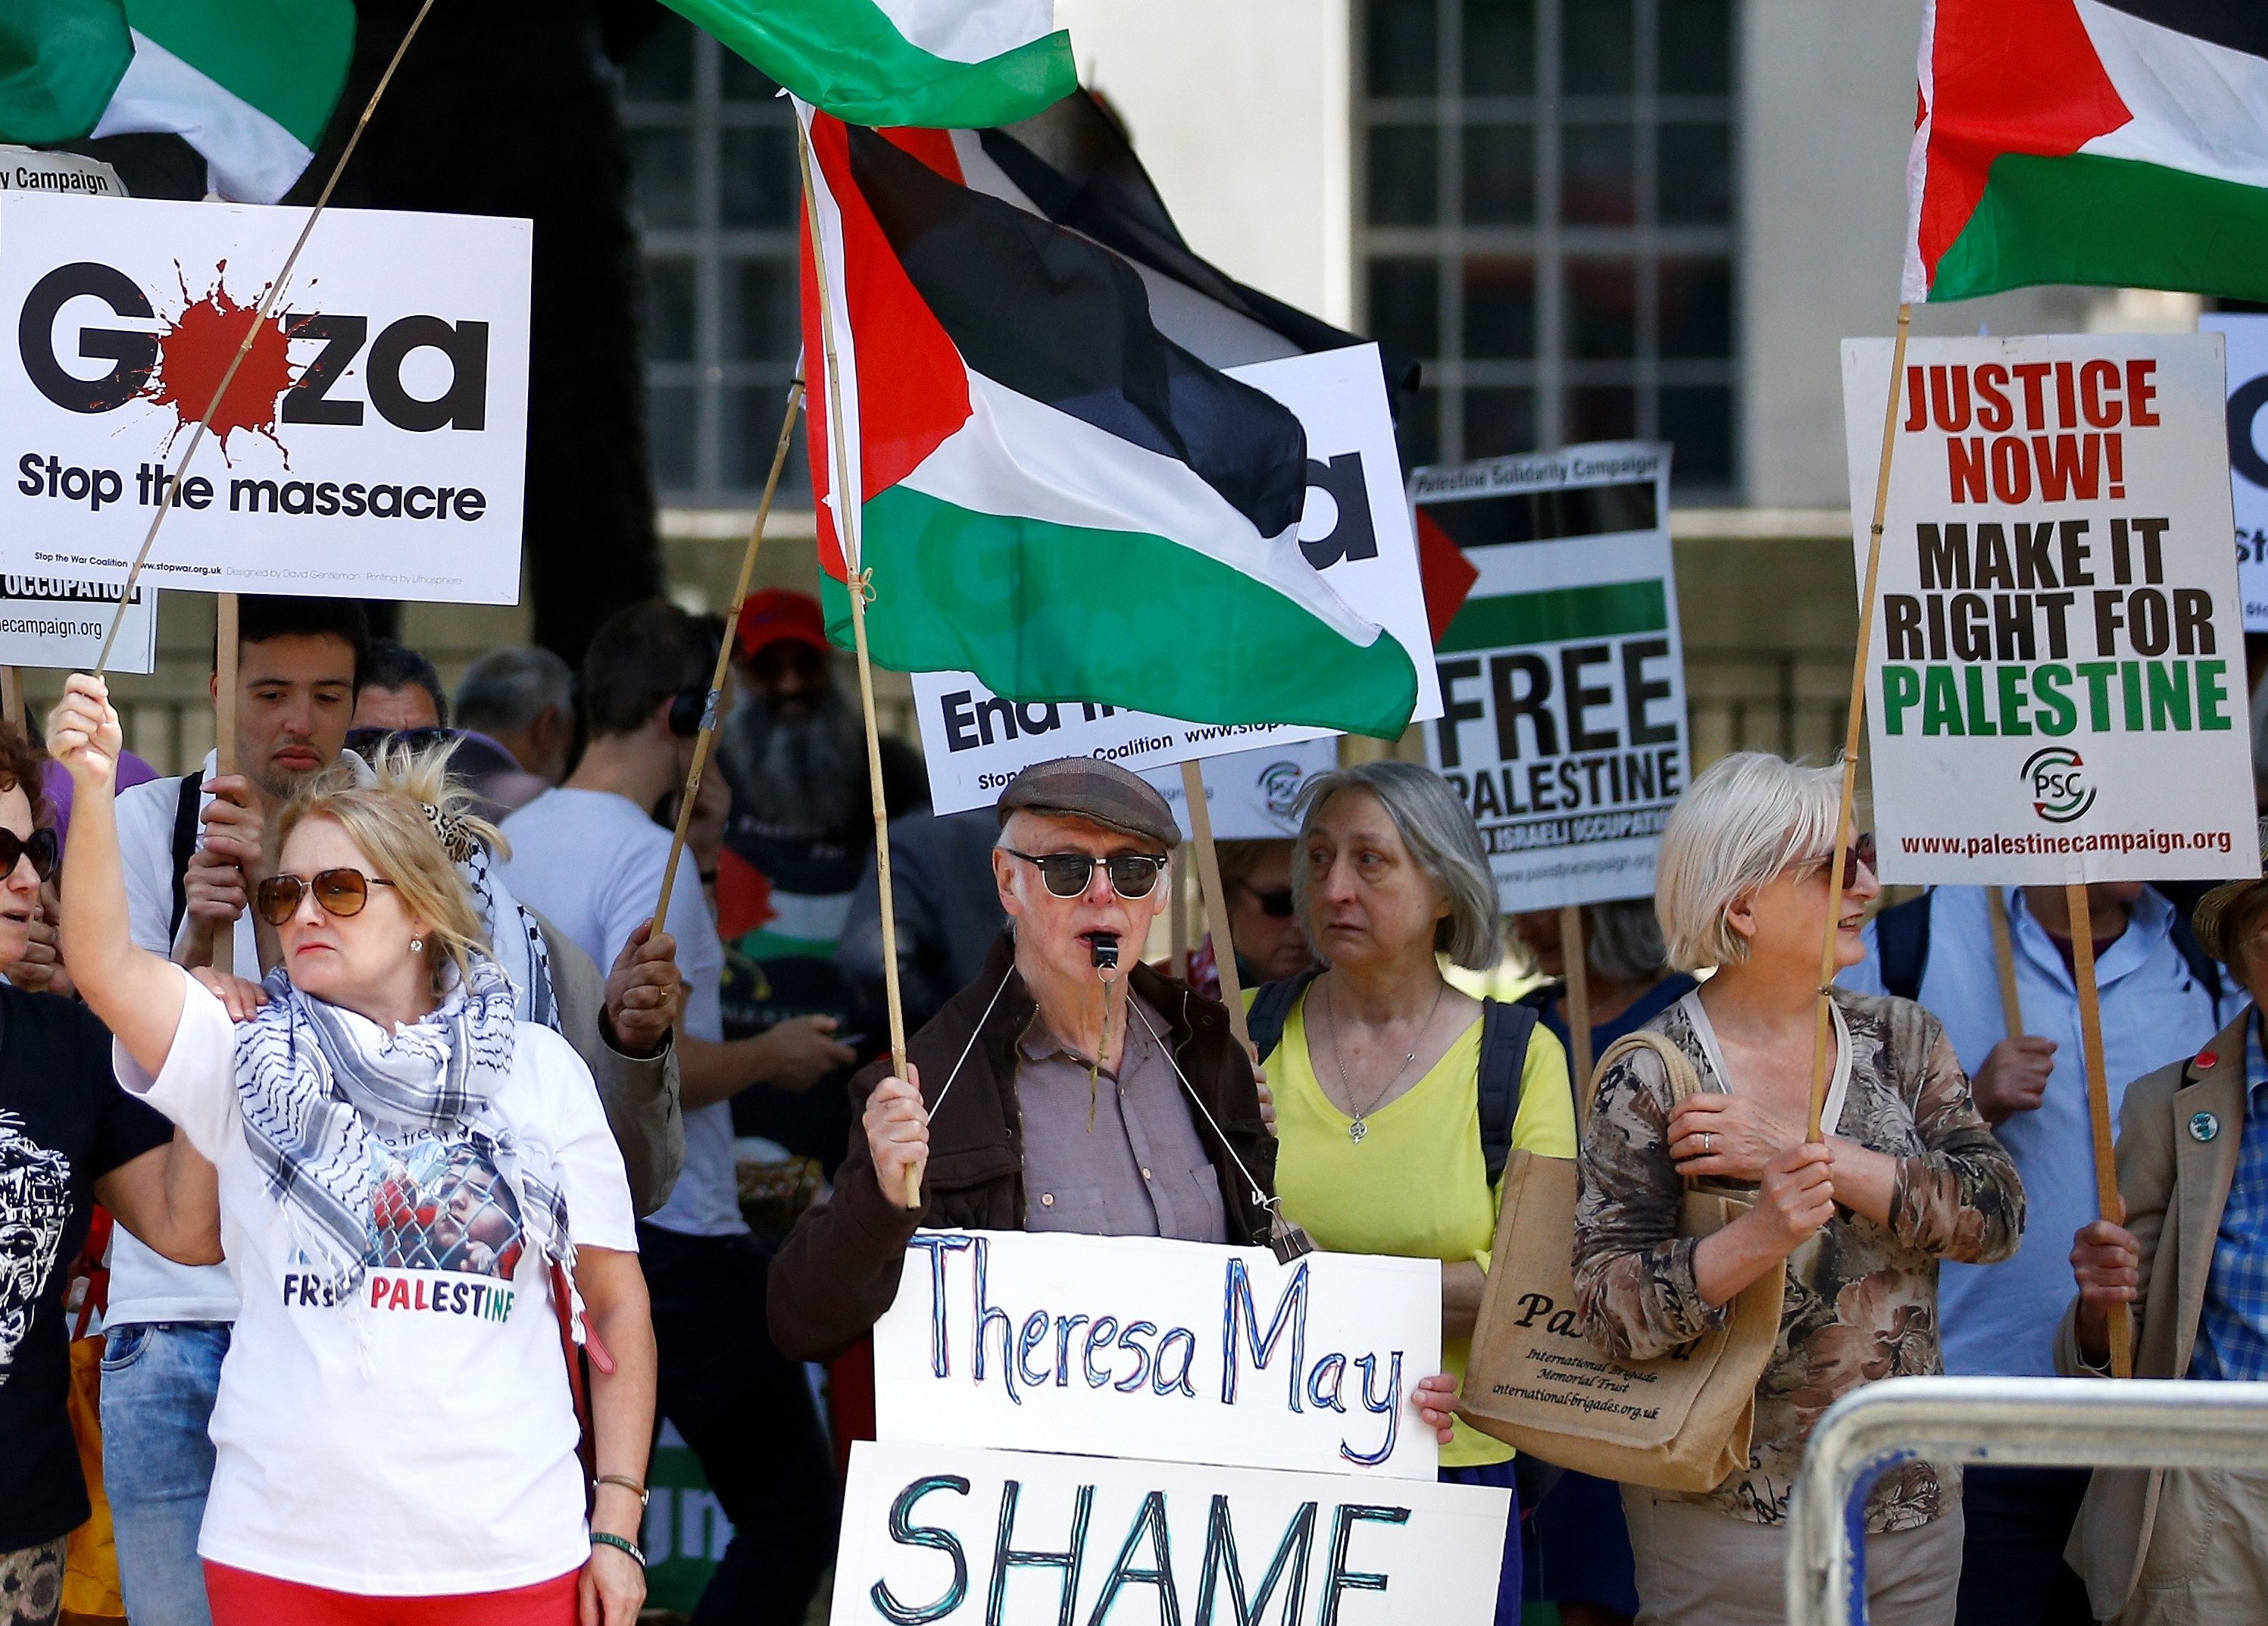  Demonstrators wave Palestinian flags opposite Downing street ahead of the visit by Israel's Prime Minister Benjamin Netanyahu, in London, Britain, on 6 June (Reuters)